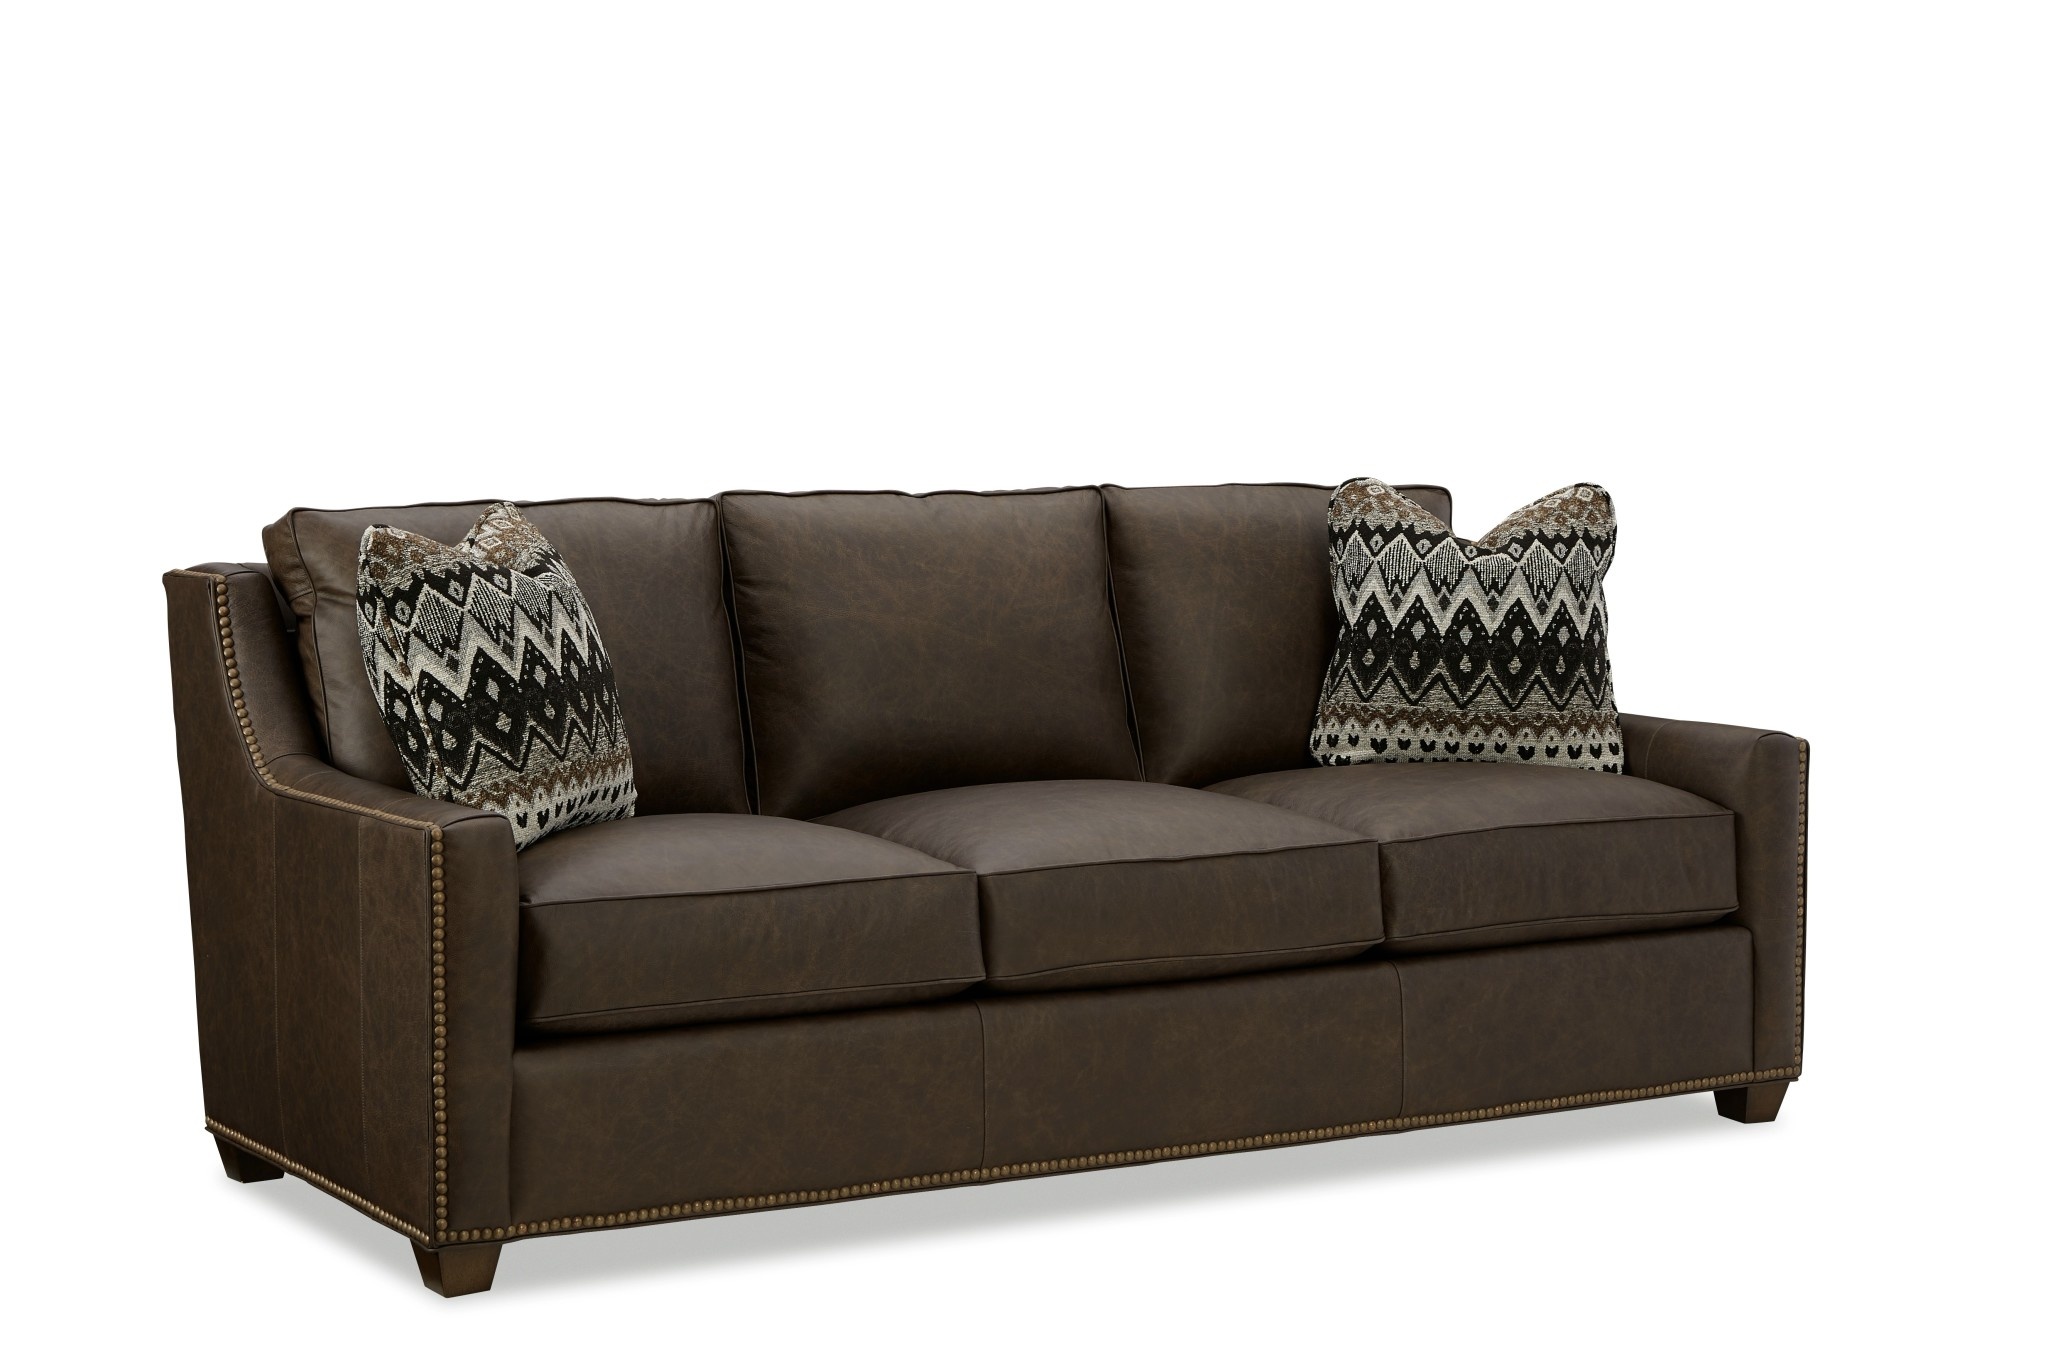 Craftmaster Furniture 7029 Leather Sofa